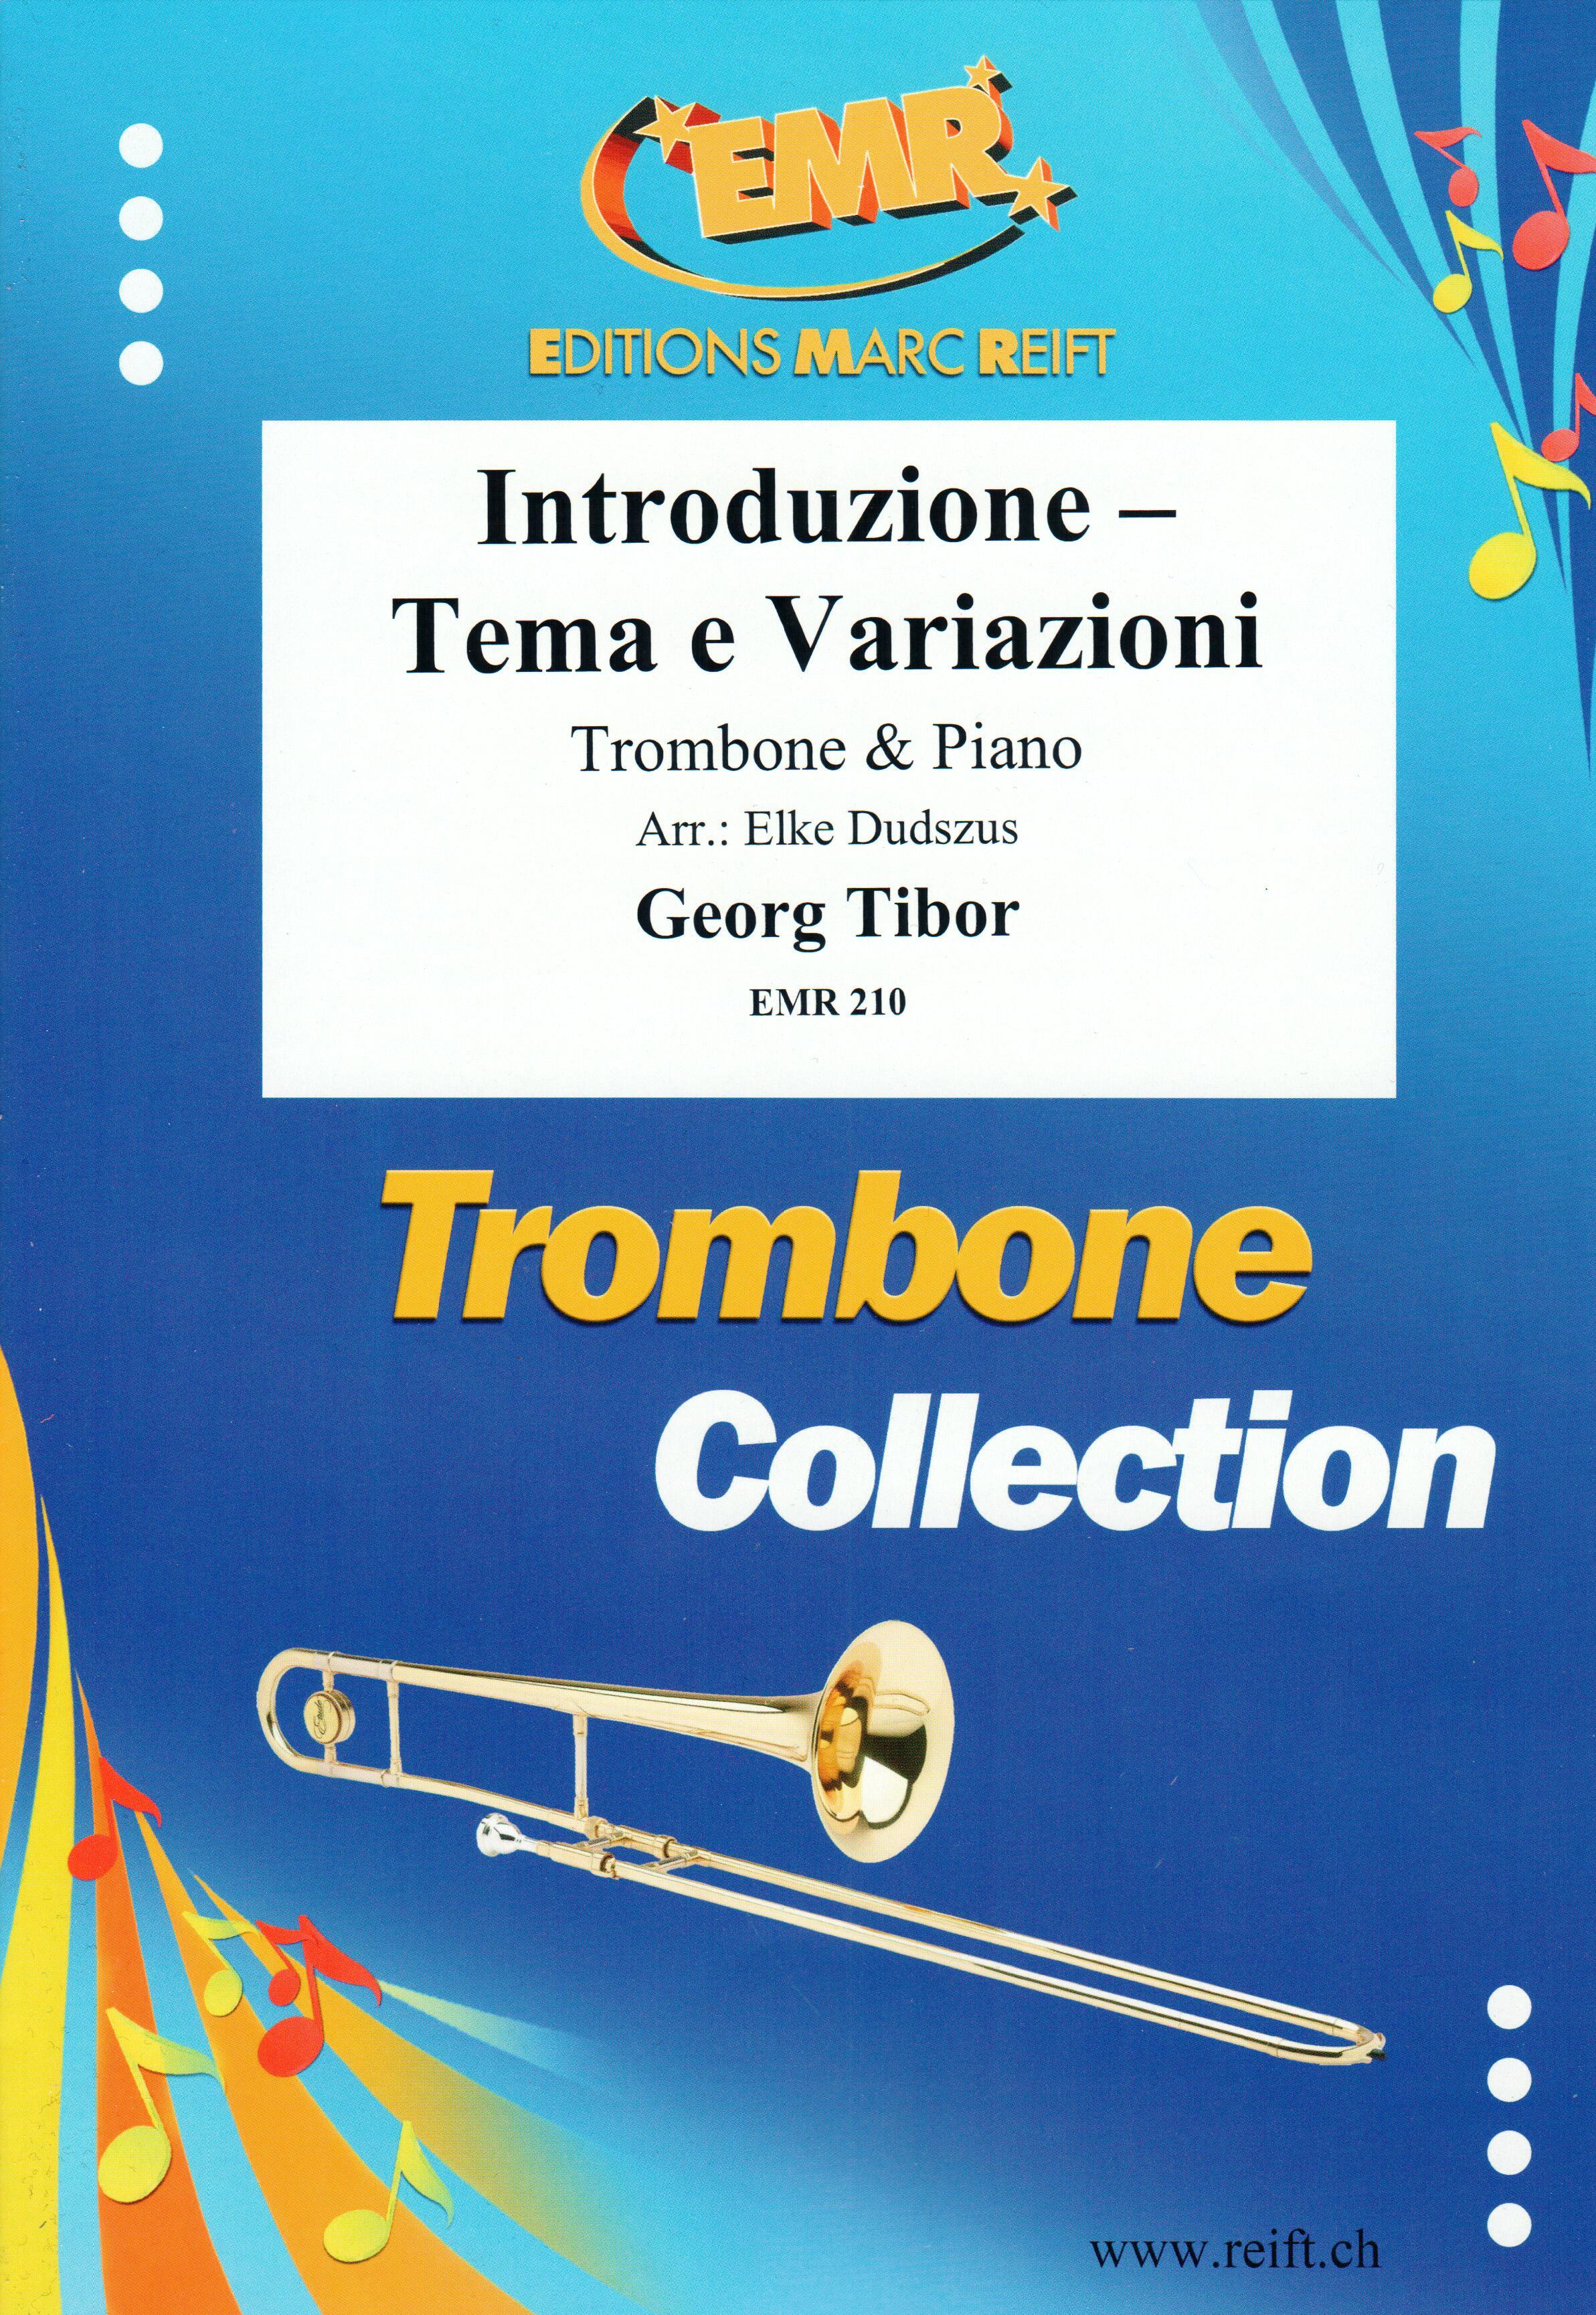 INTRODUZIONE TEMA E VARIAZIONI, SOLOS - Trombone